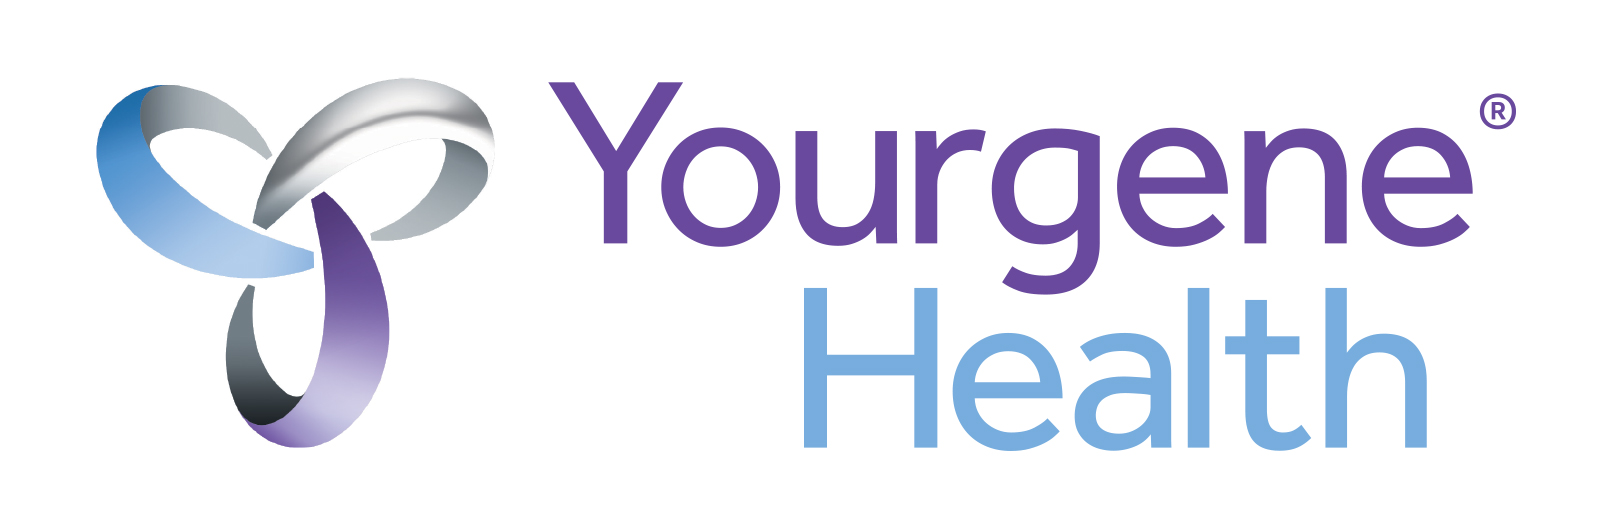 Yourgene health logotype